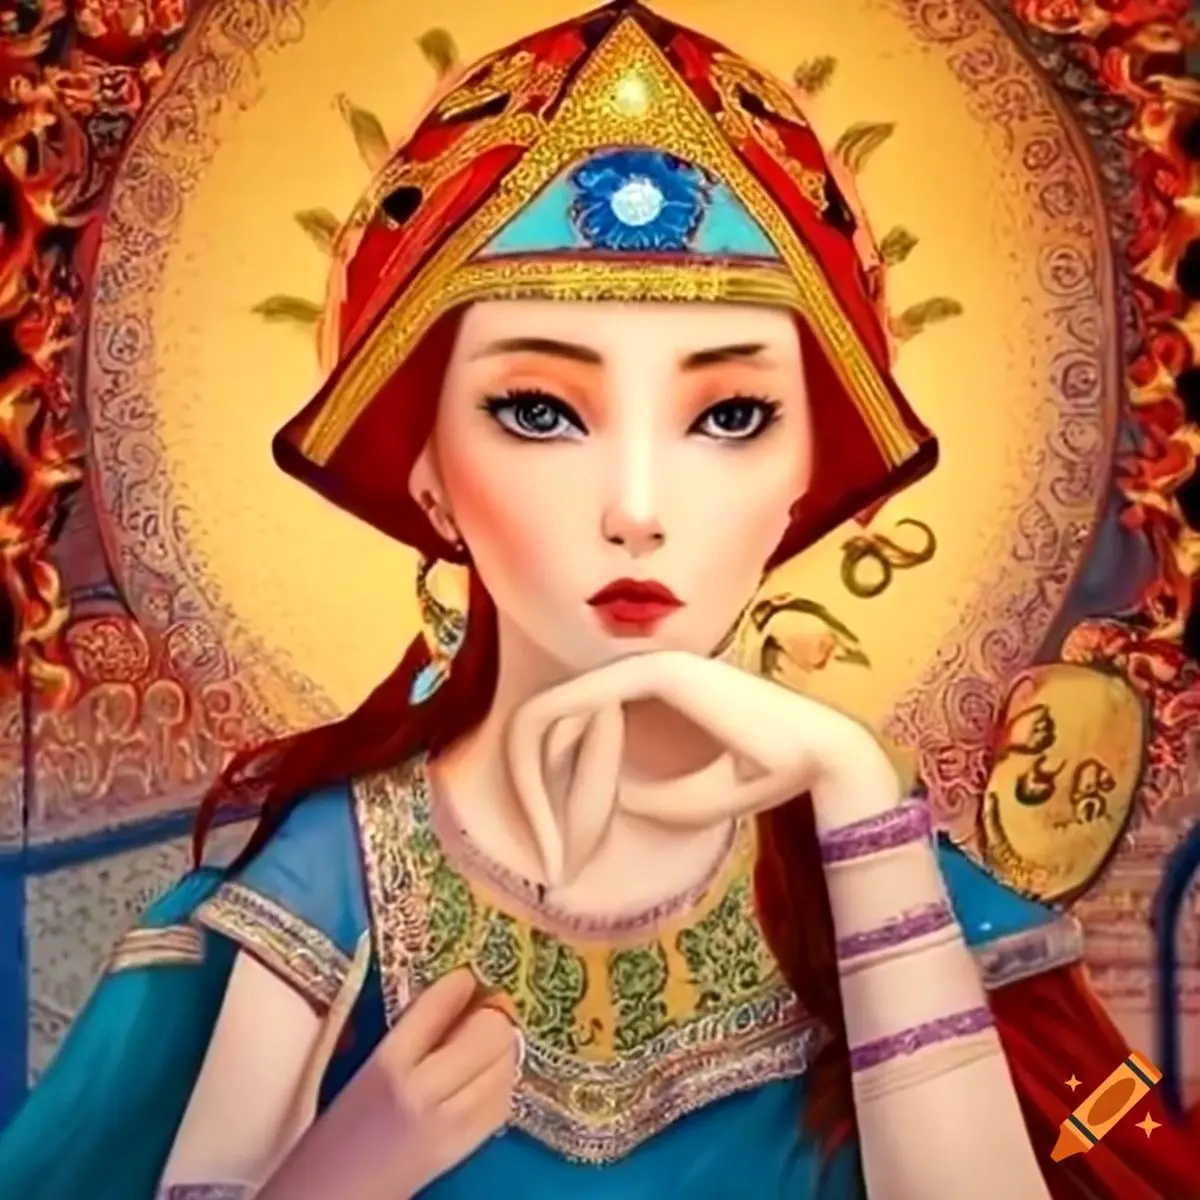 craiyon_154858_traditional_Kazakh_fairy_tale